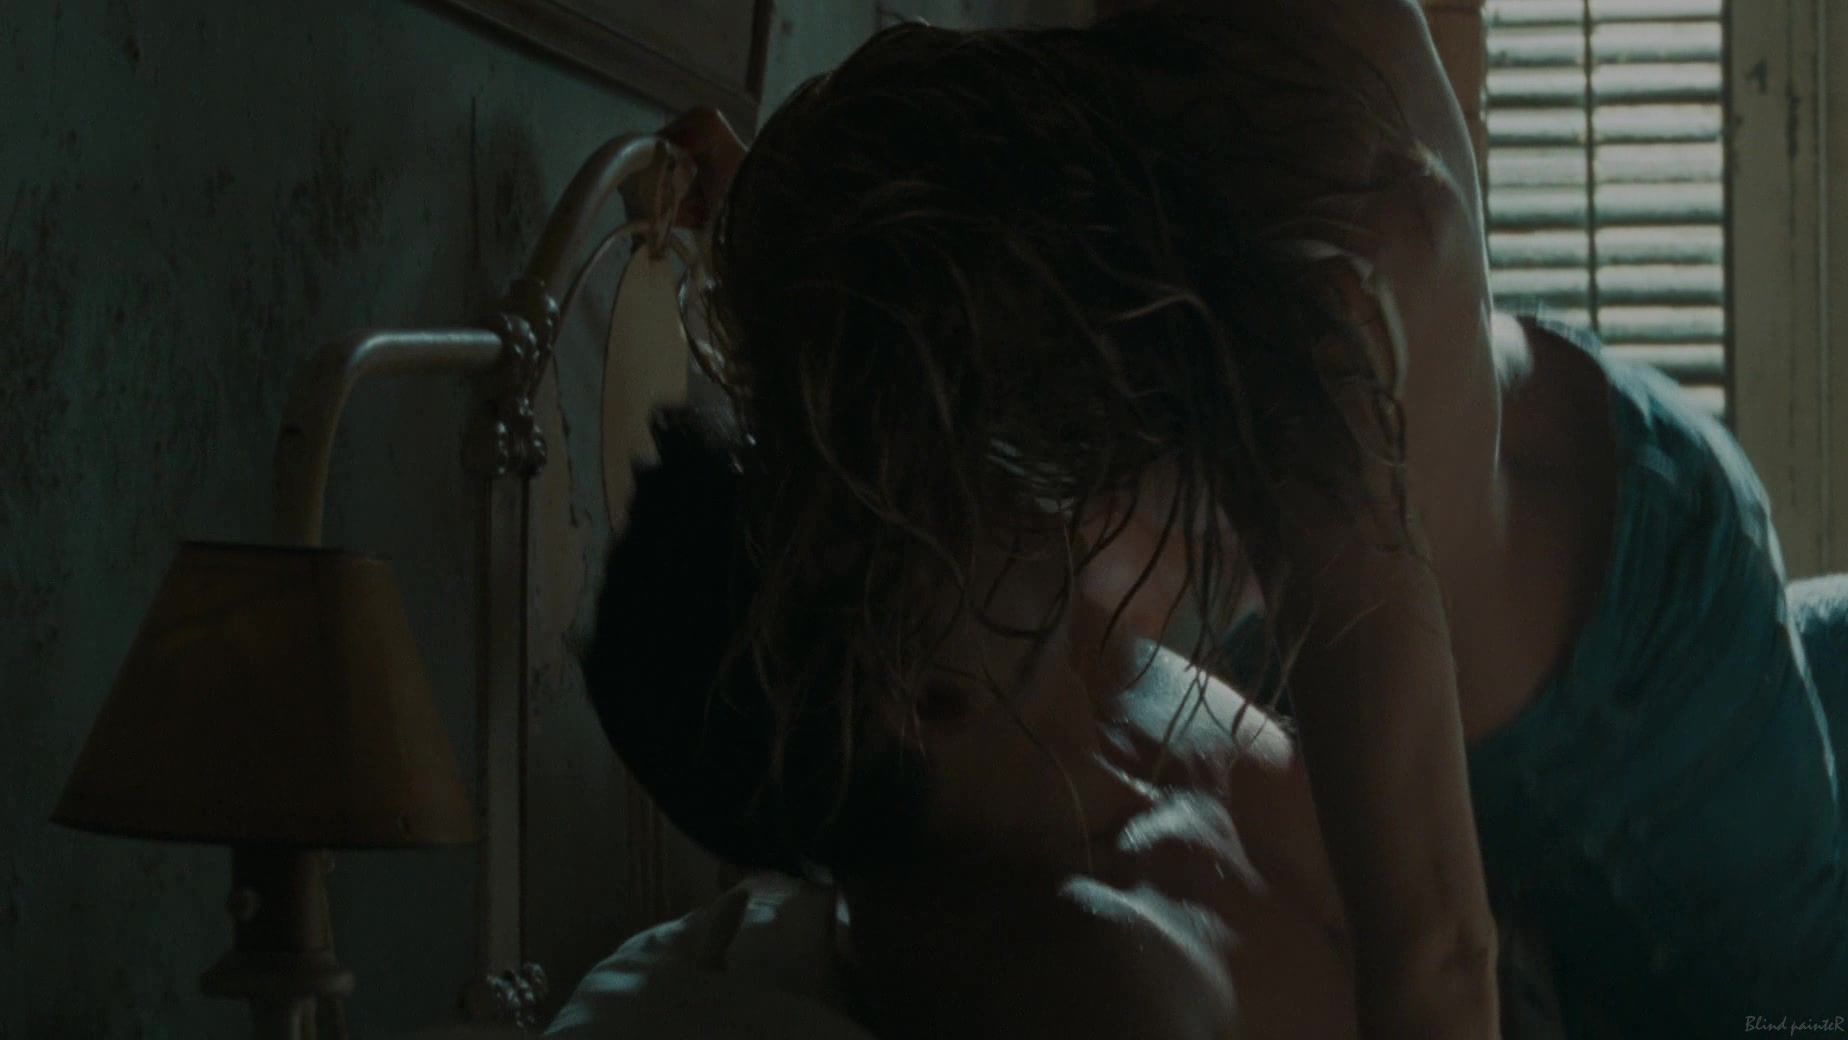 Beach Sex video Amber Heard nude - The Rum Diary (2011) Storyline - 2